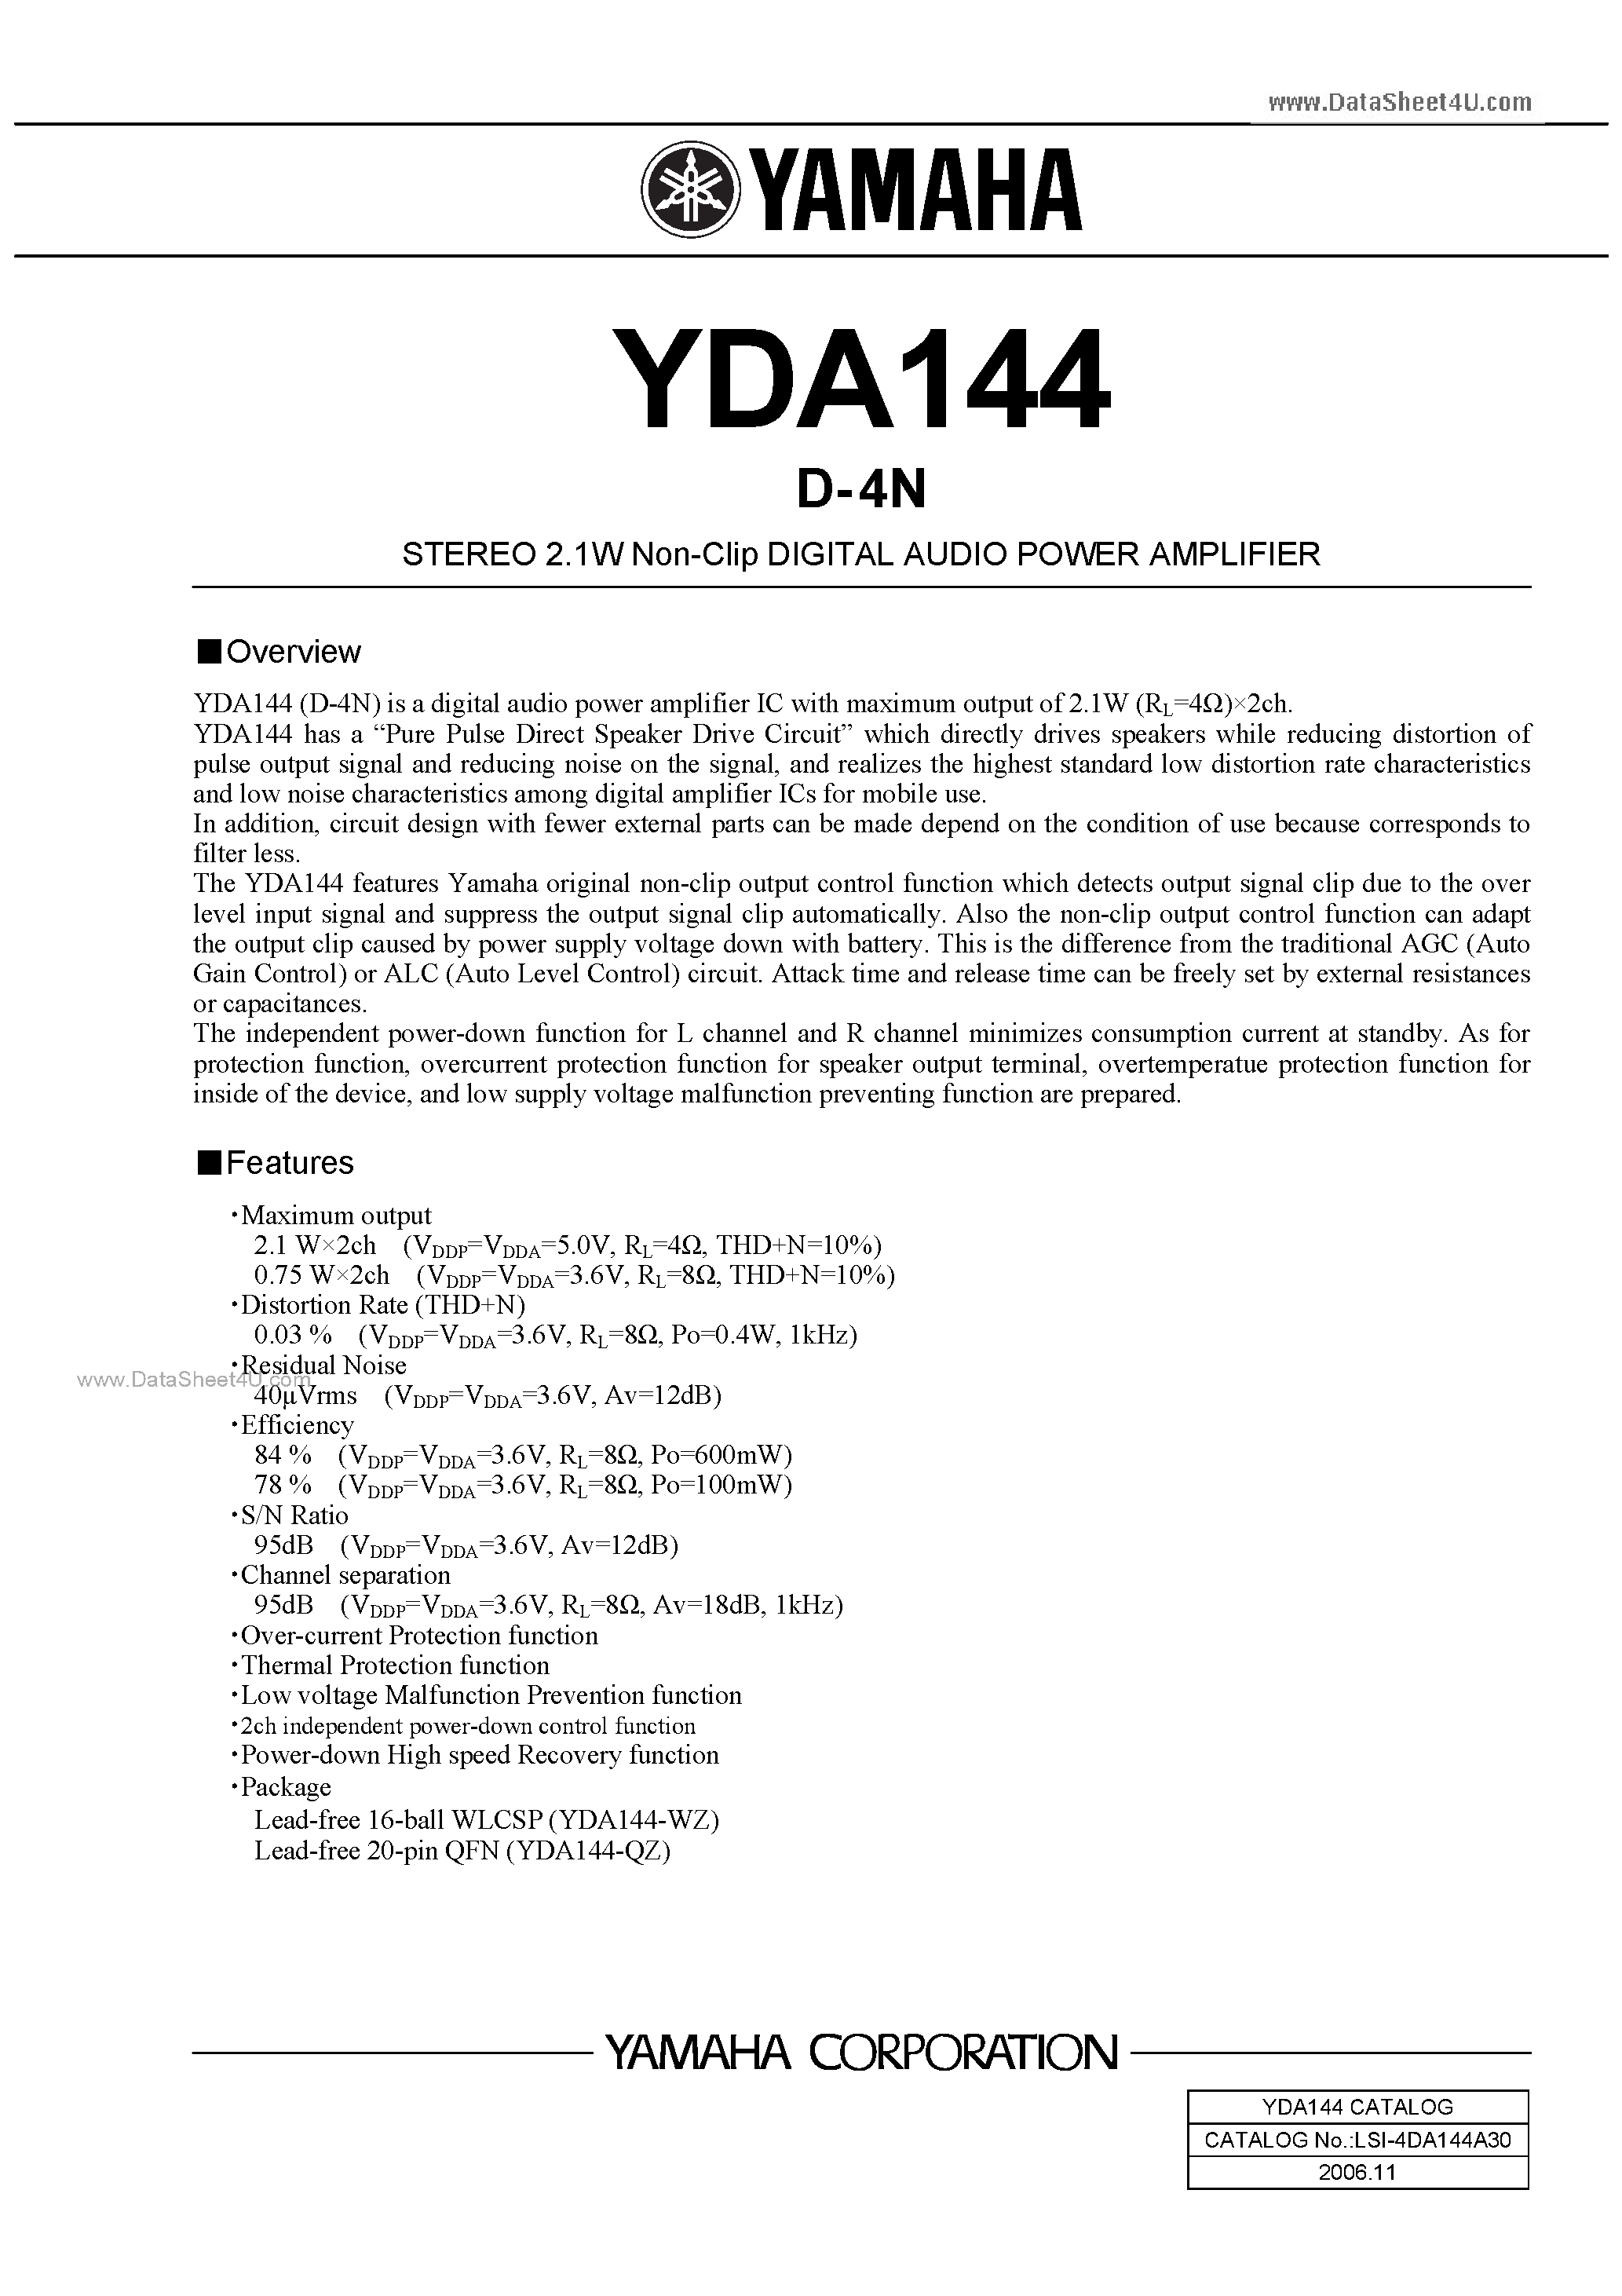 Datasheet YDA144 - STEREO 2.1W Non-Clip DIGITAL AUDIO POWER AMPLIFIER page 1